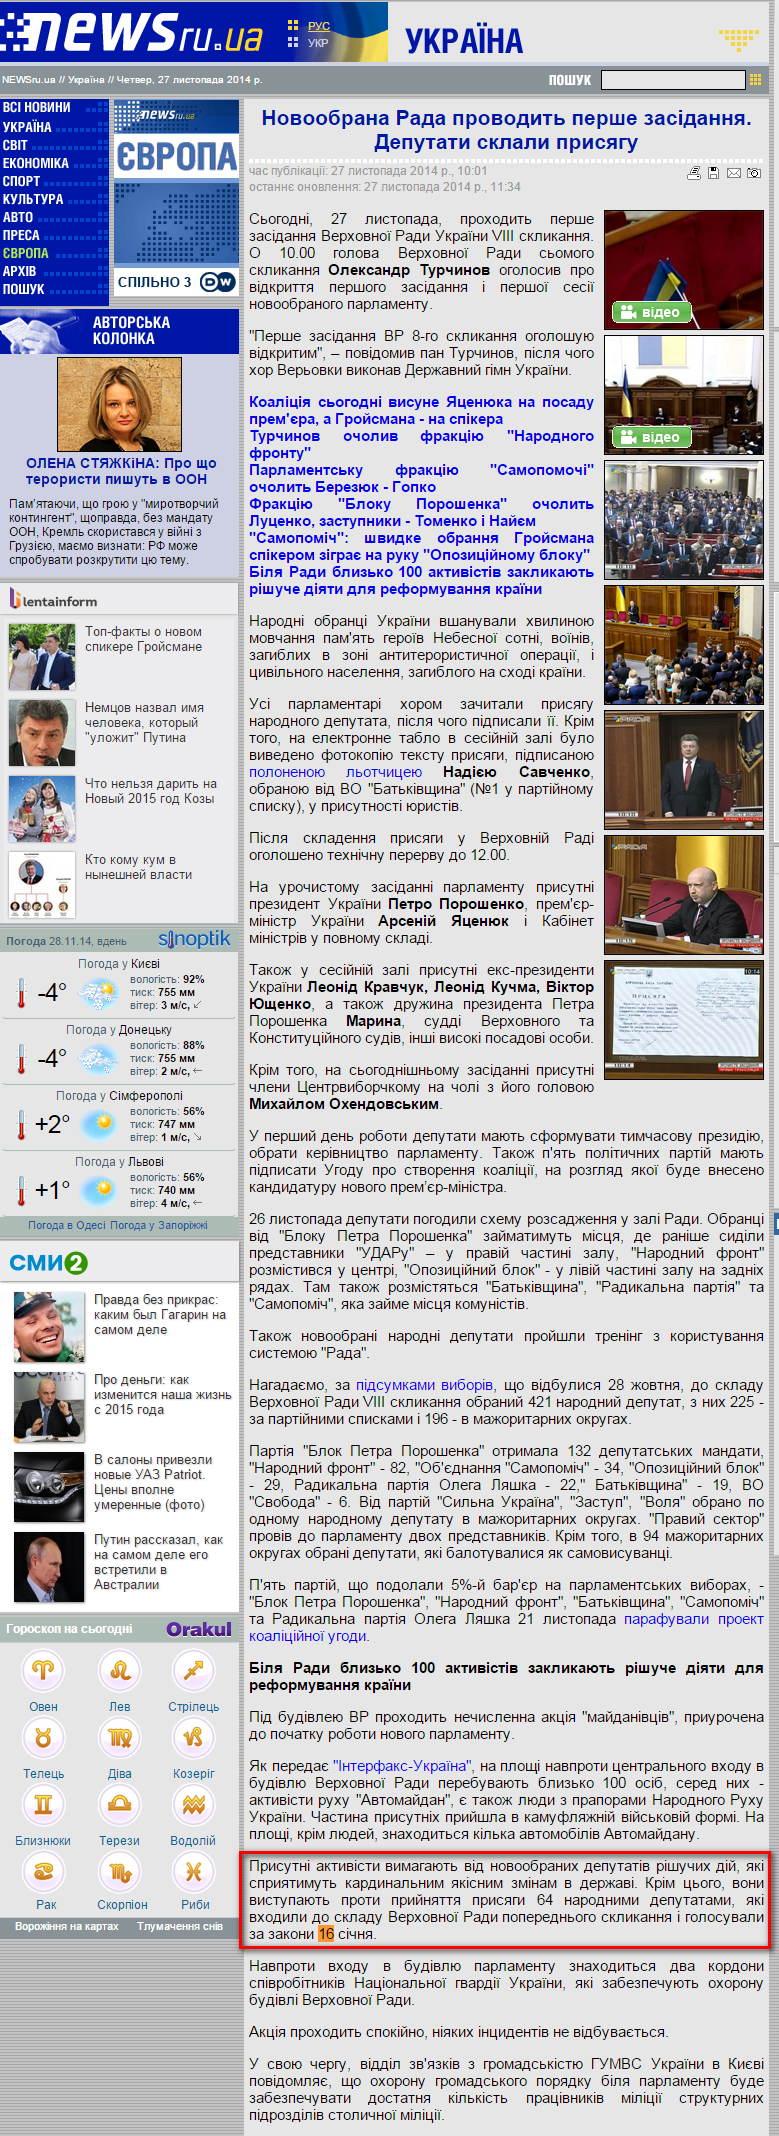 http://www.newsru.ua/ukraine/27nov2014/pervoezased.html